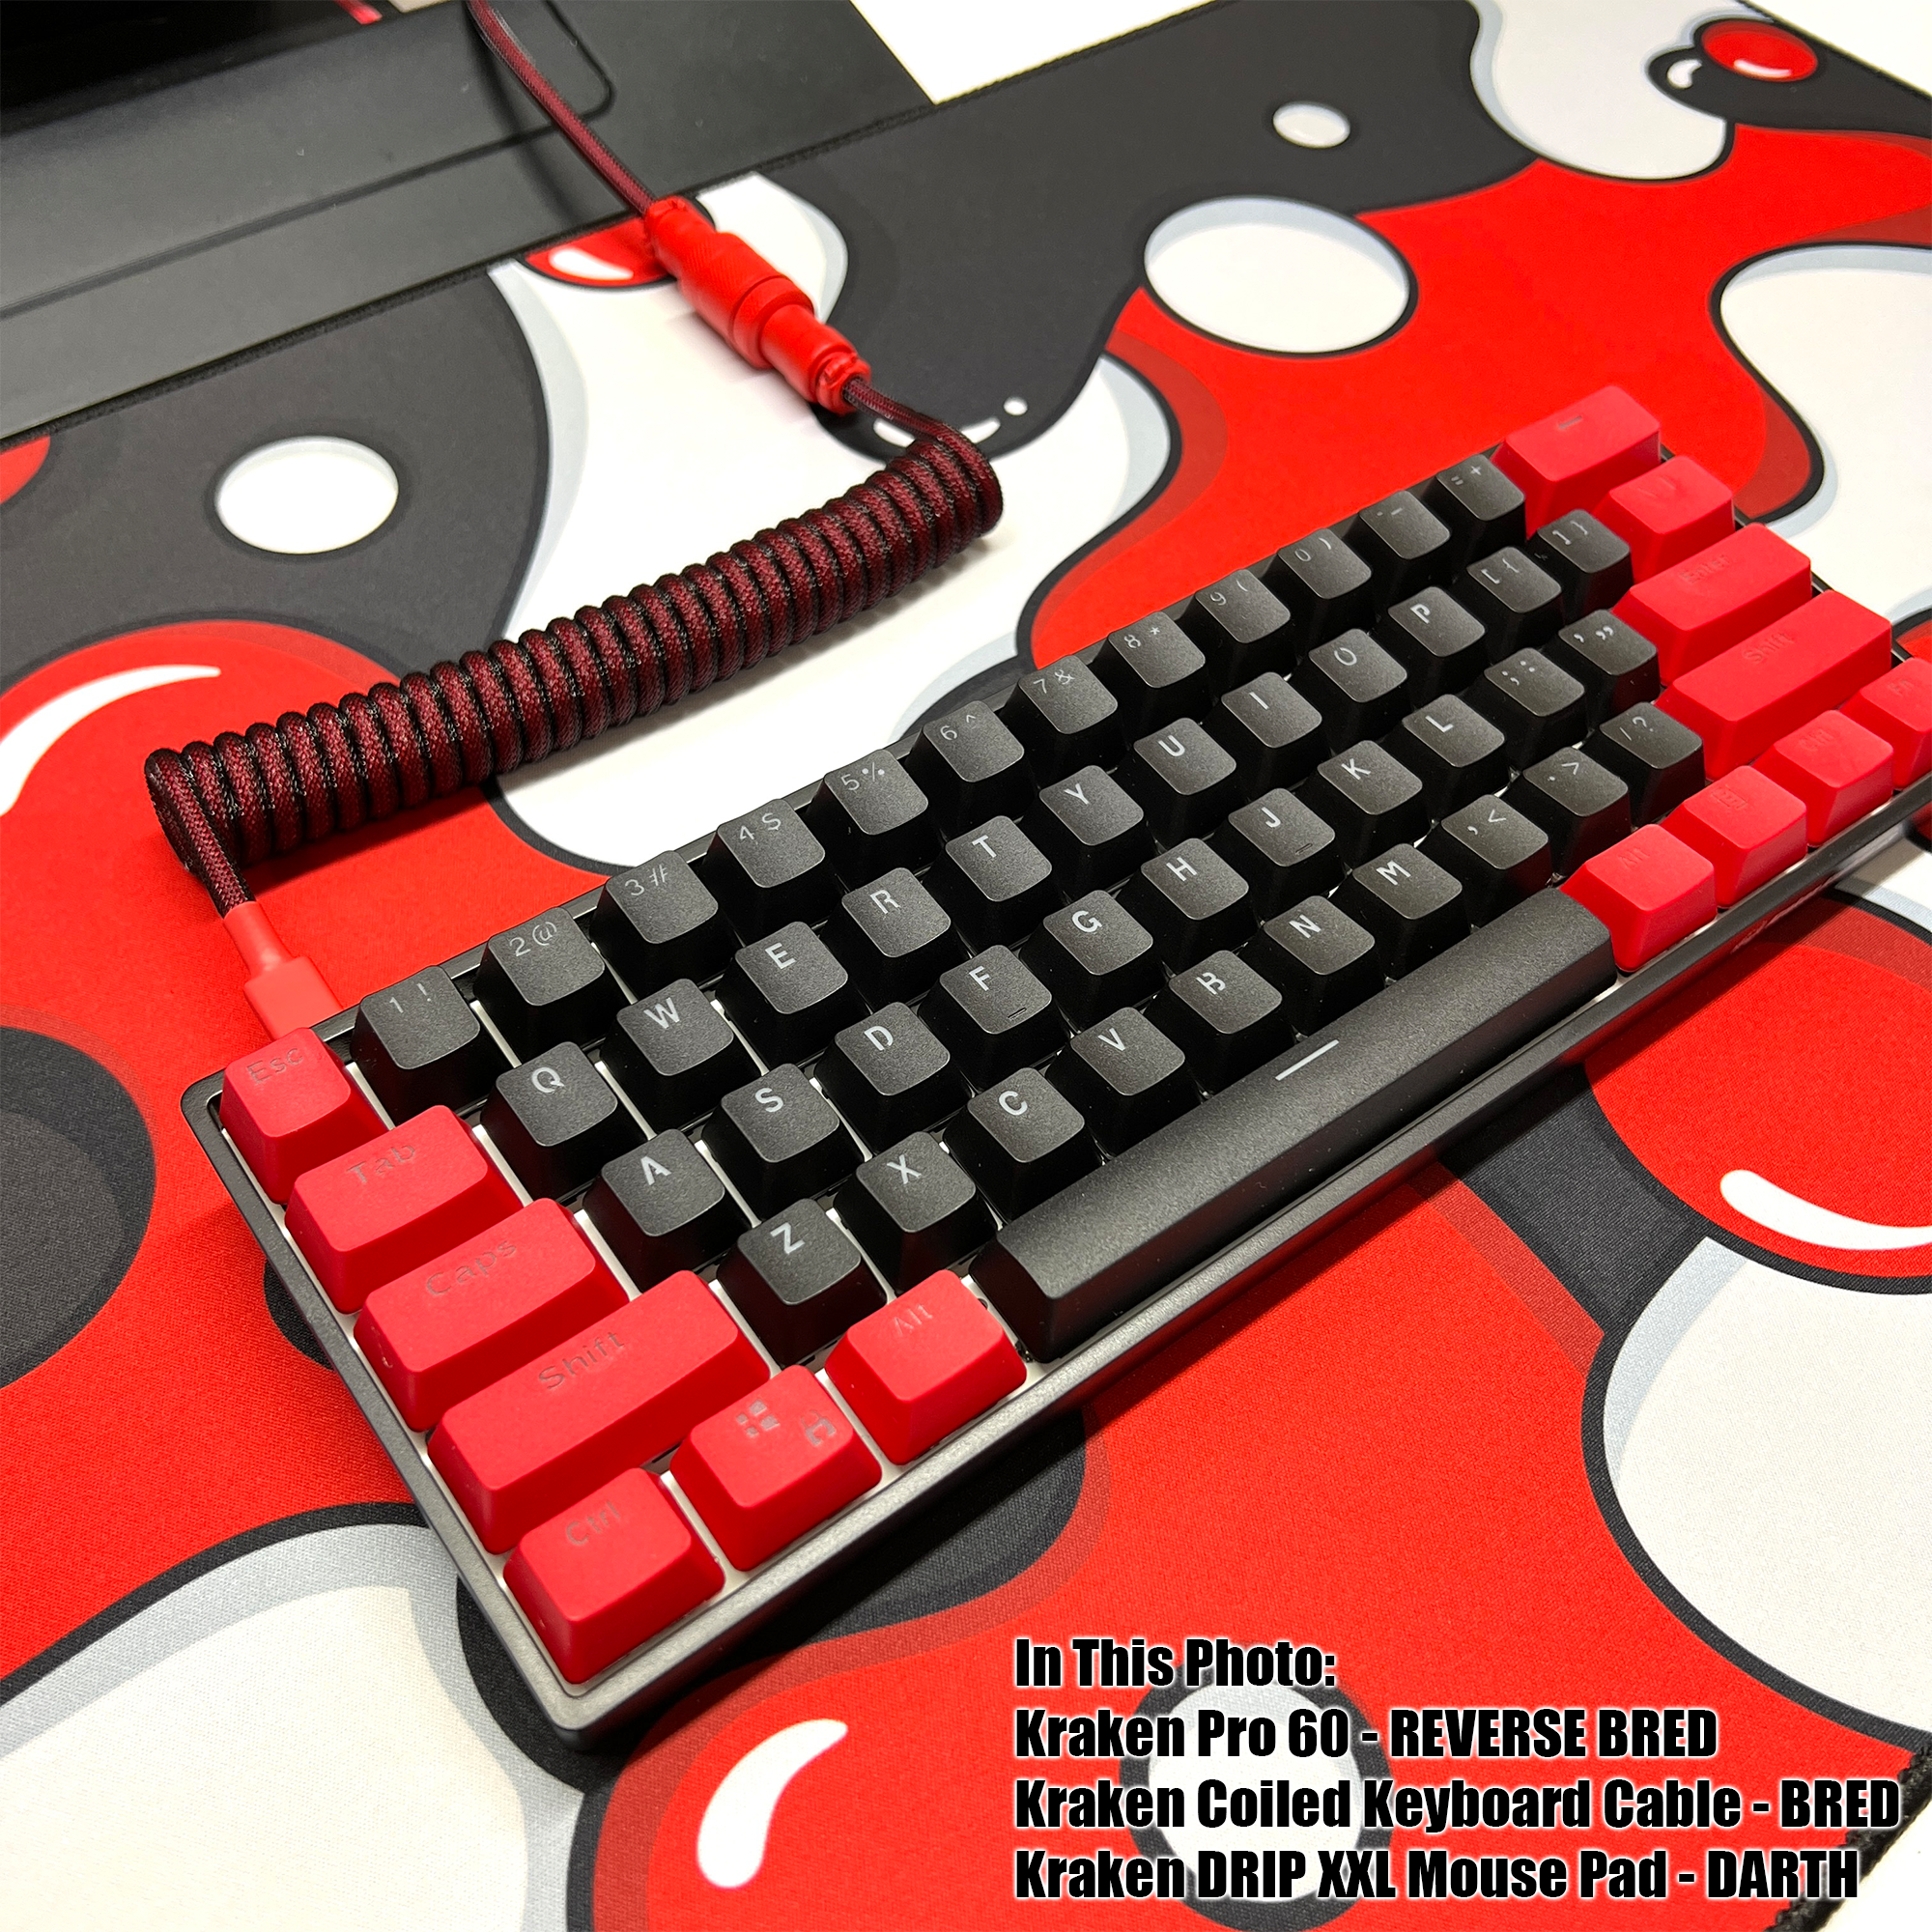 DRIP EDITION XXL Gaming Mouse Pad - DARTH